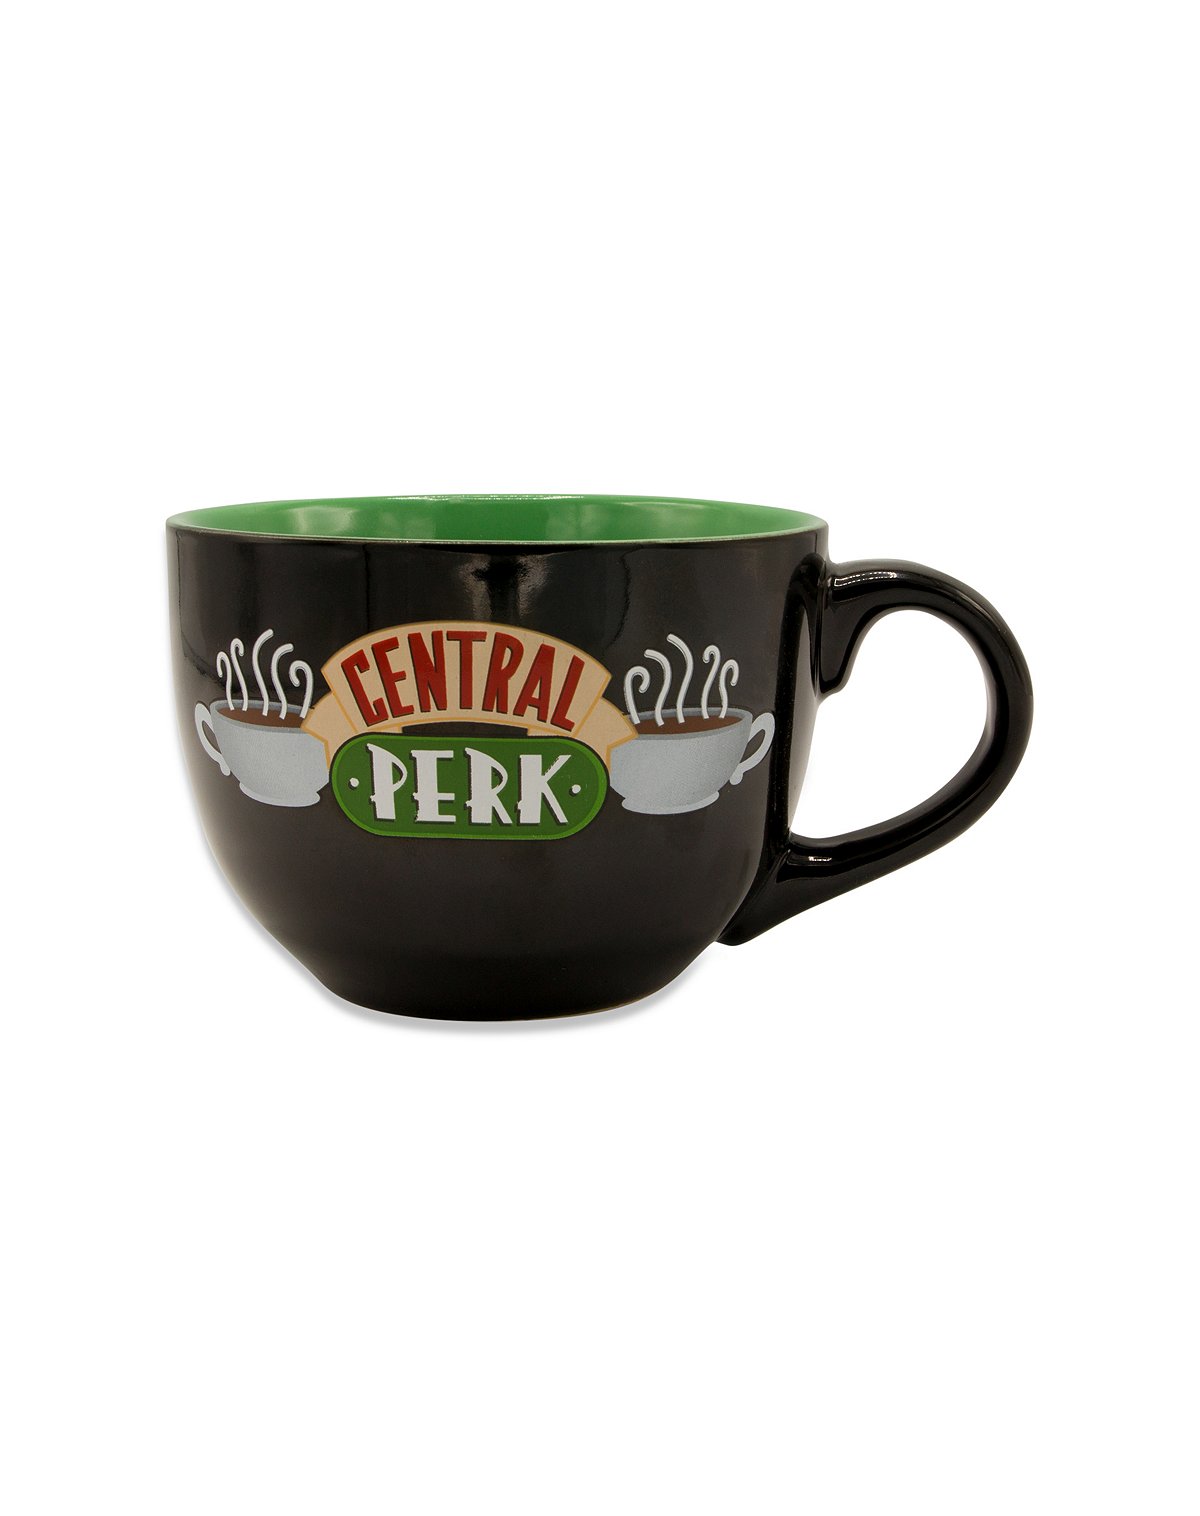 Central Perk Soup Mug 24 oz. - Friends
